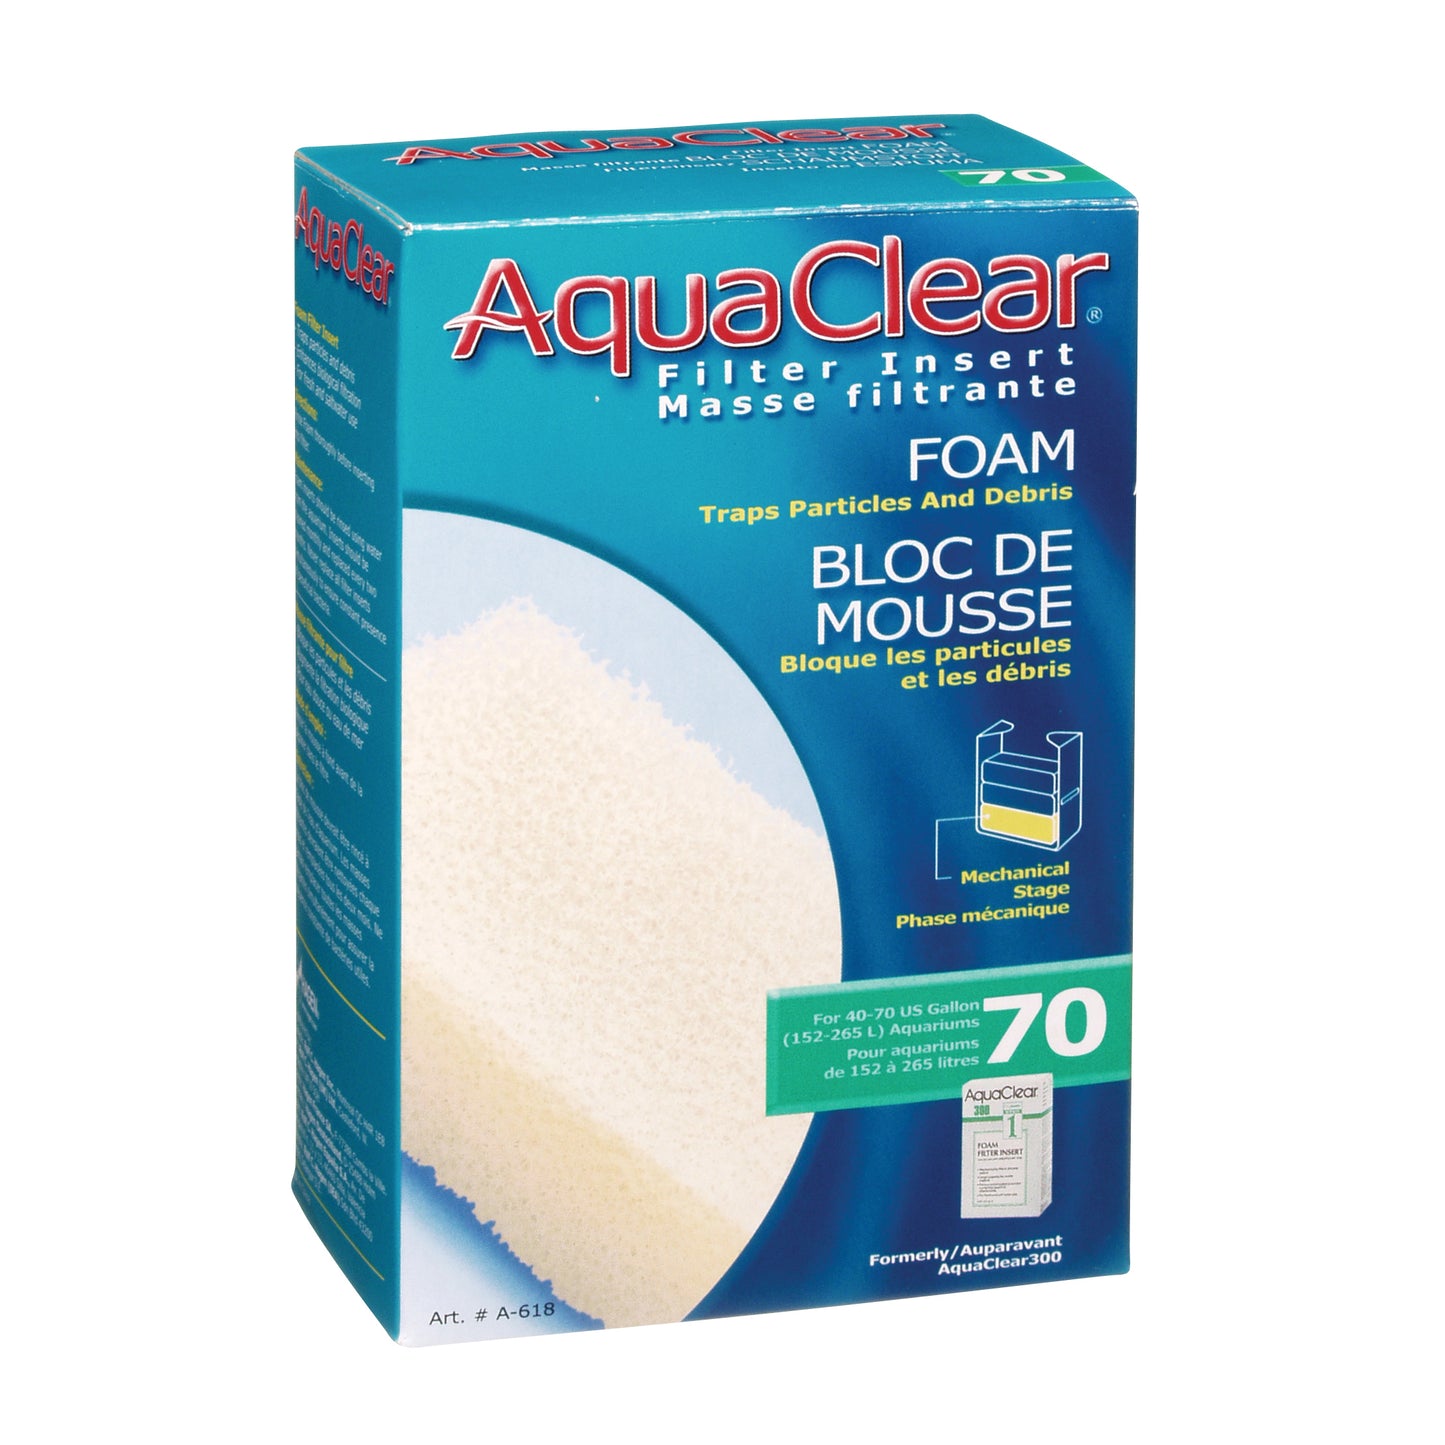 AquaClear Foam Filter Insert